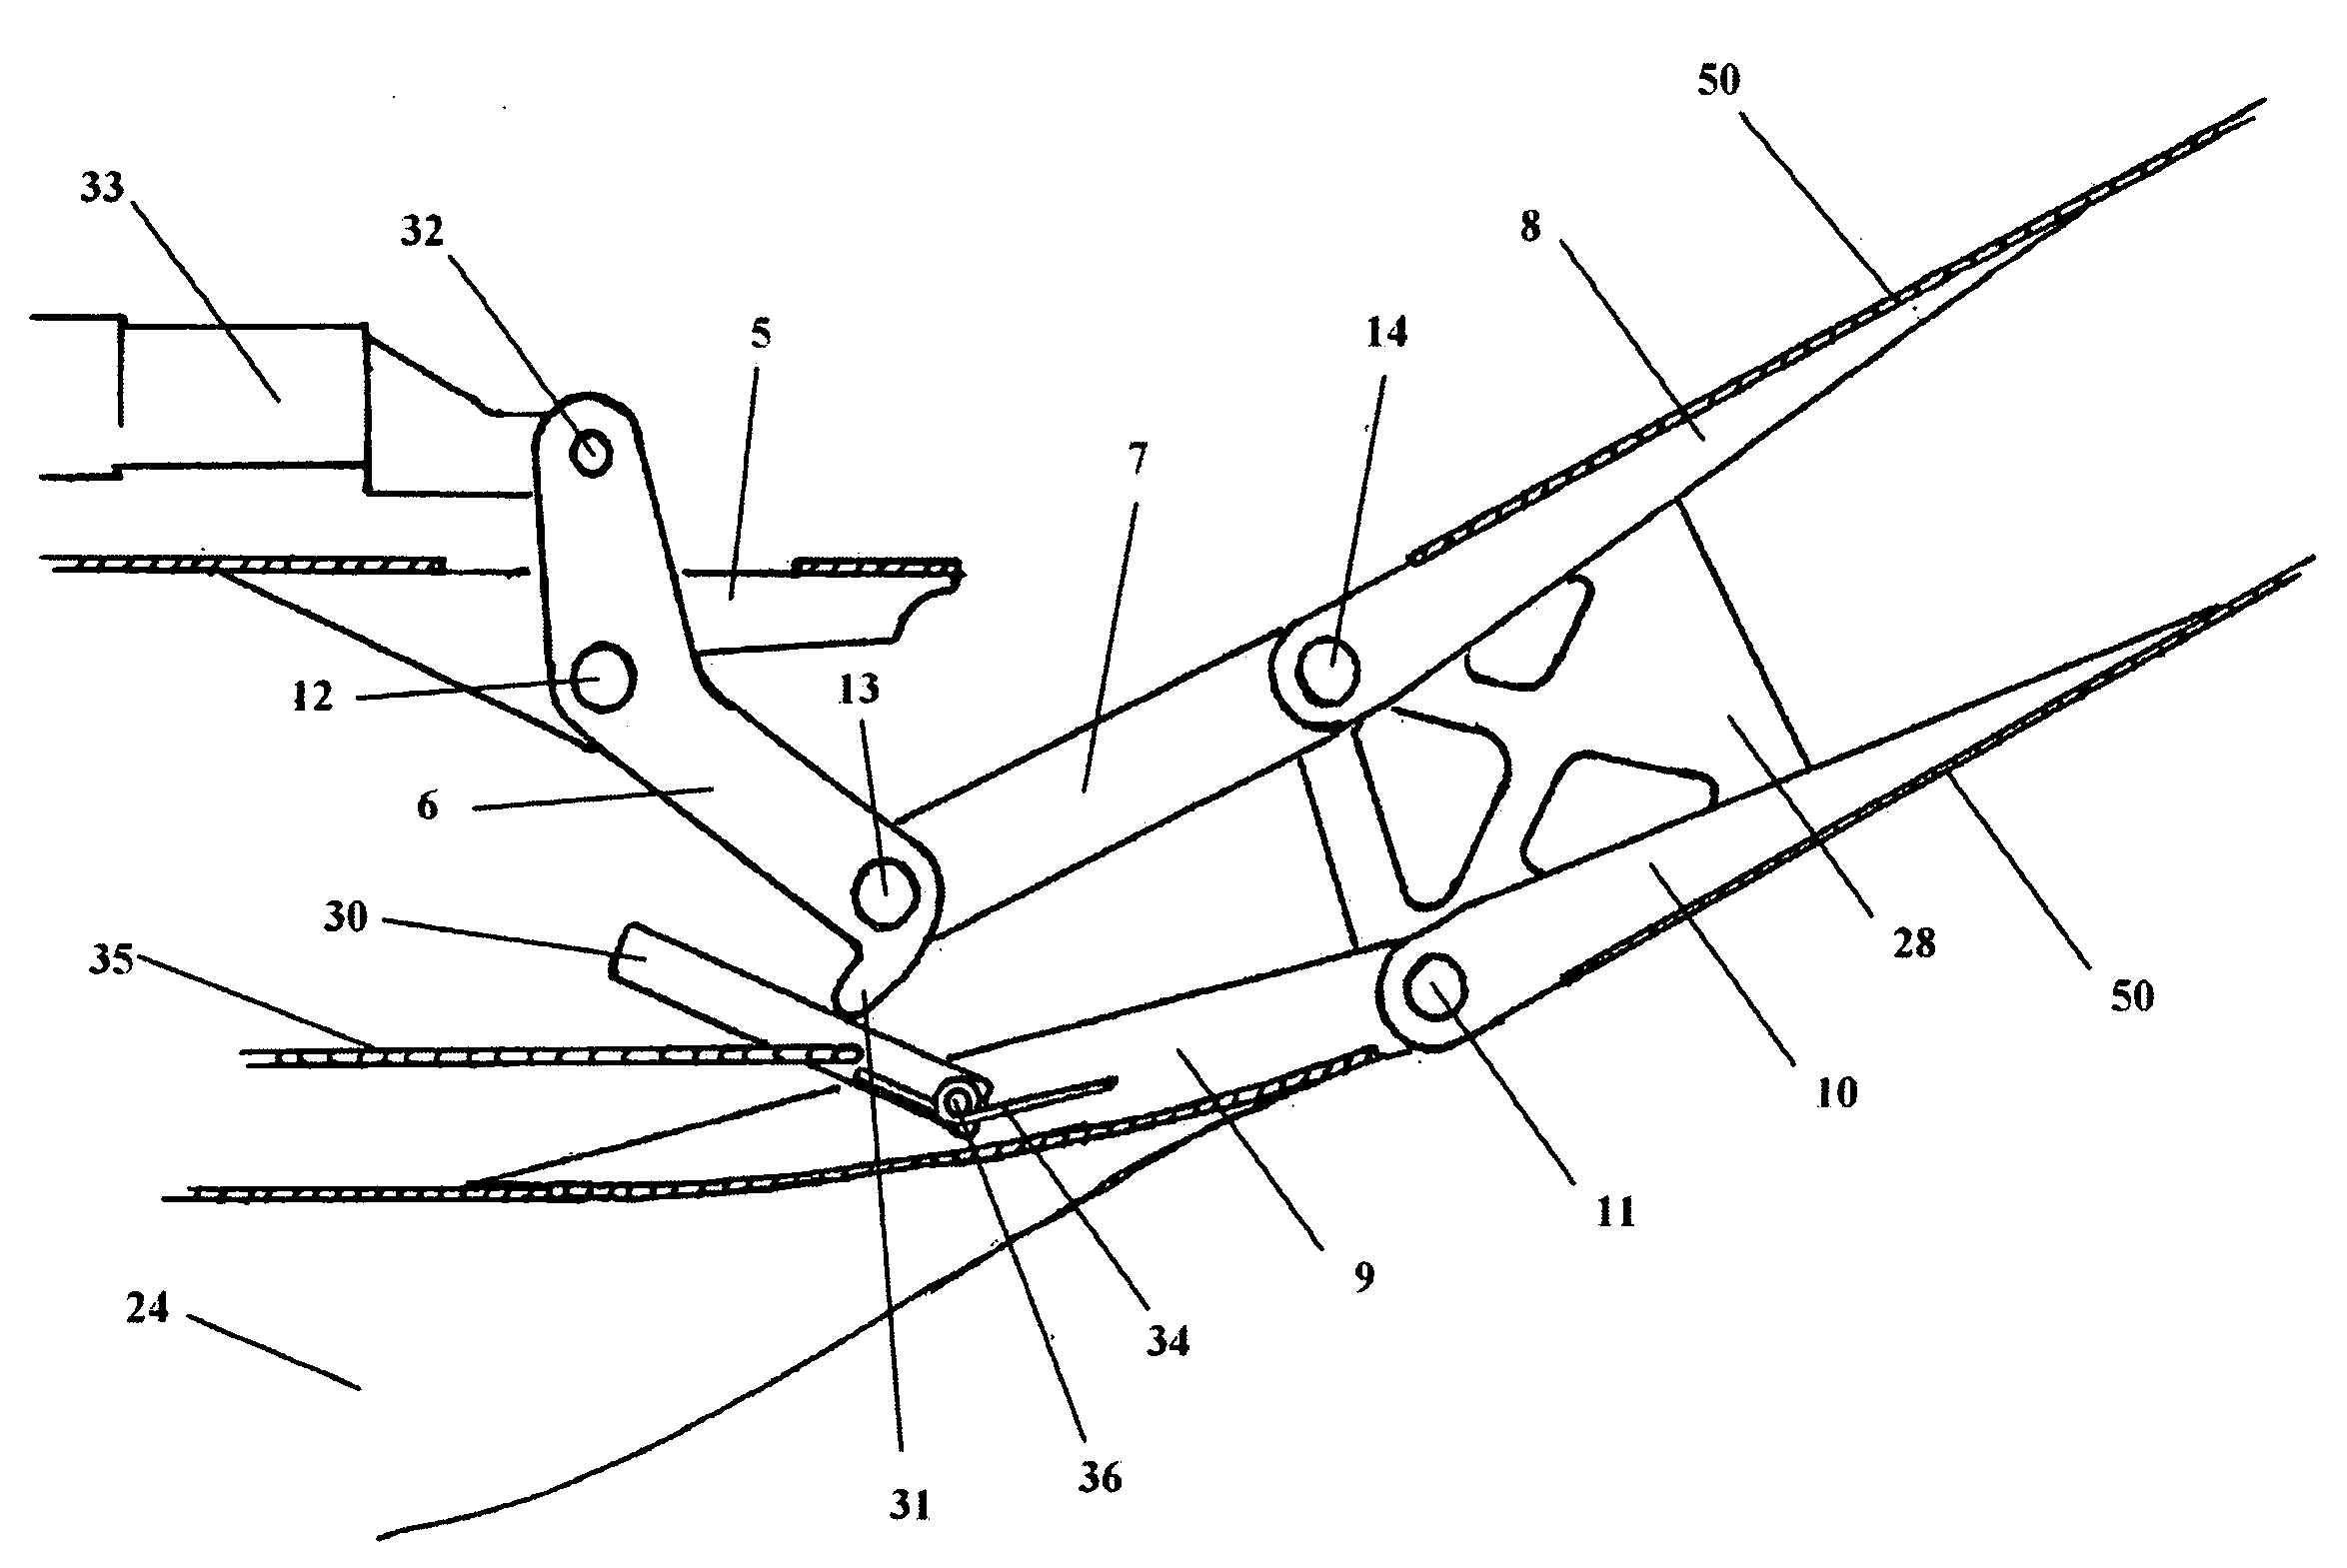 Folding Wing Root Mechanism